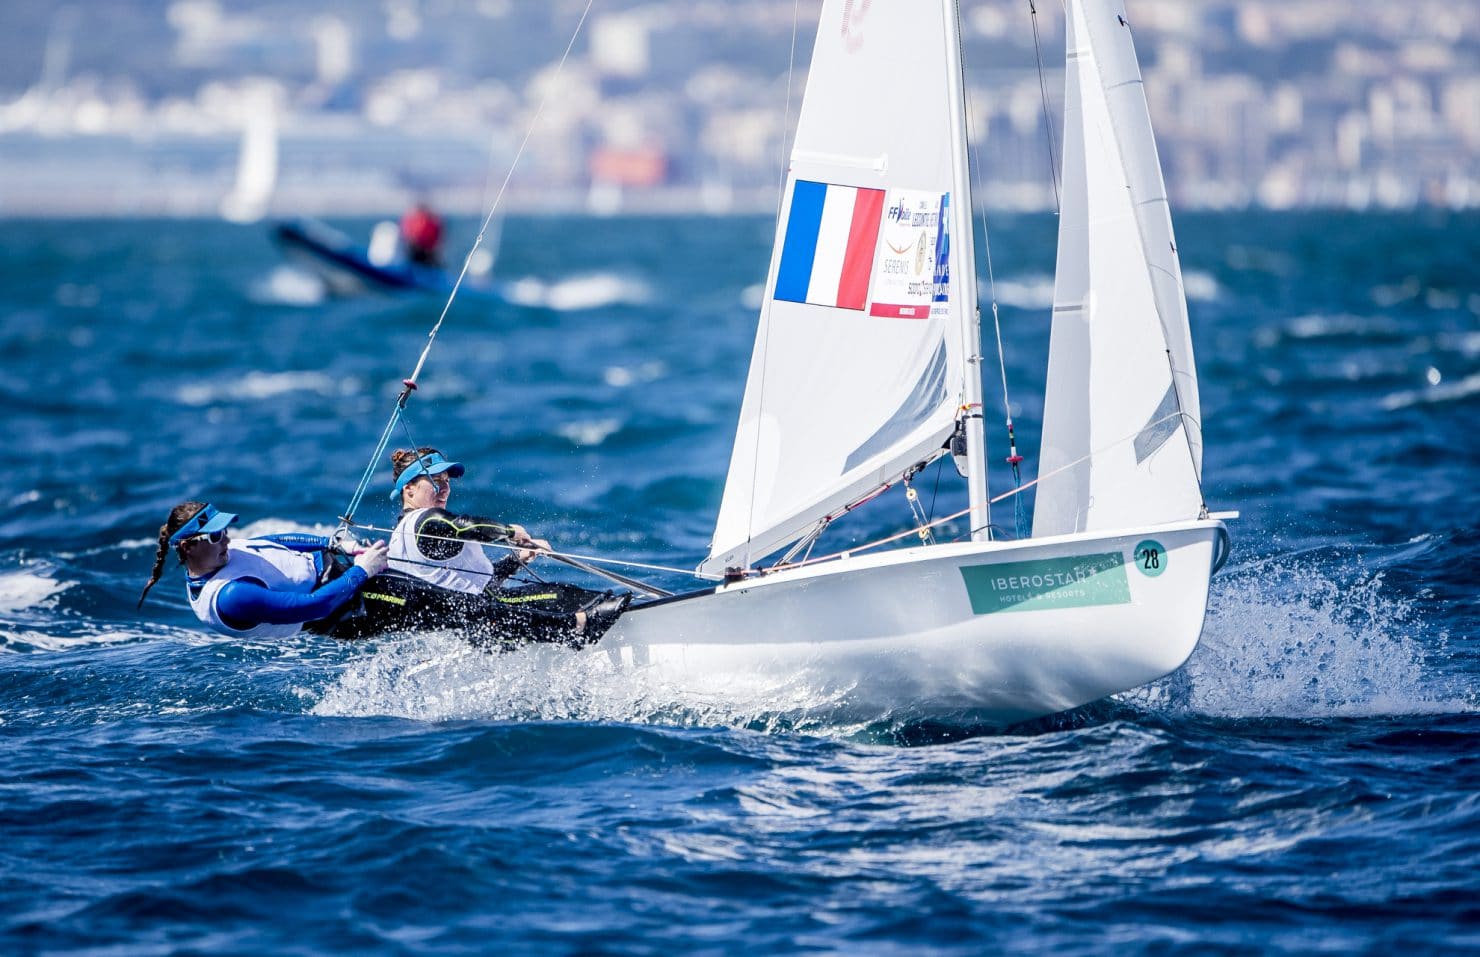 2018, 470 Women, FRA 28 470 Women FRA-9 Camille LECOINTRE Aloise RETORNAZ, Mallorca, Olympic sailing, Trofeo Princesa Sofia Iberostar